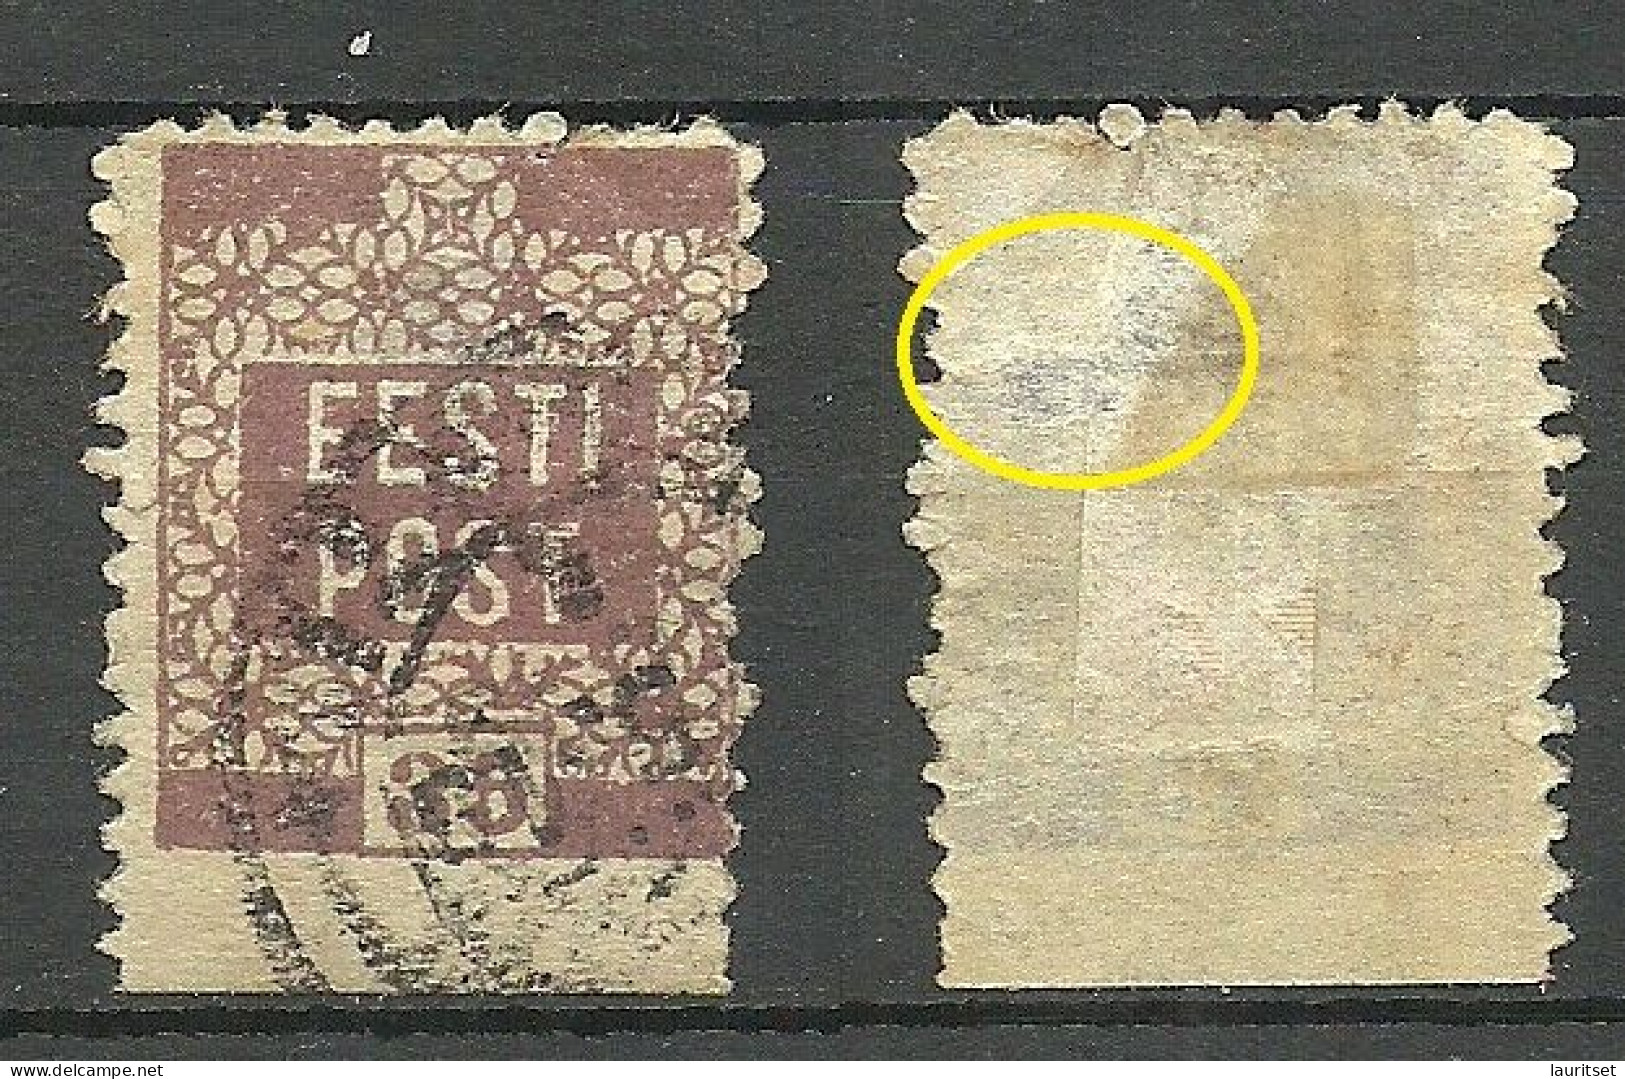 ESTLAND Estonia 1919 Michel 3 Local Postmeisterzähnung Postmaster's Perforation NB! Thinned Place! - Estonia